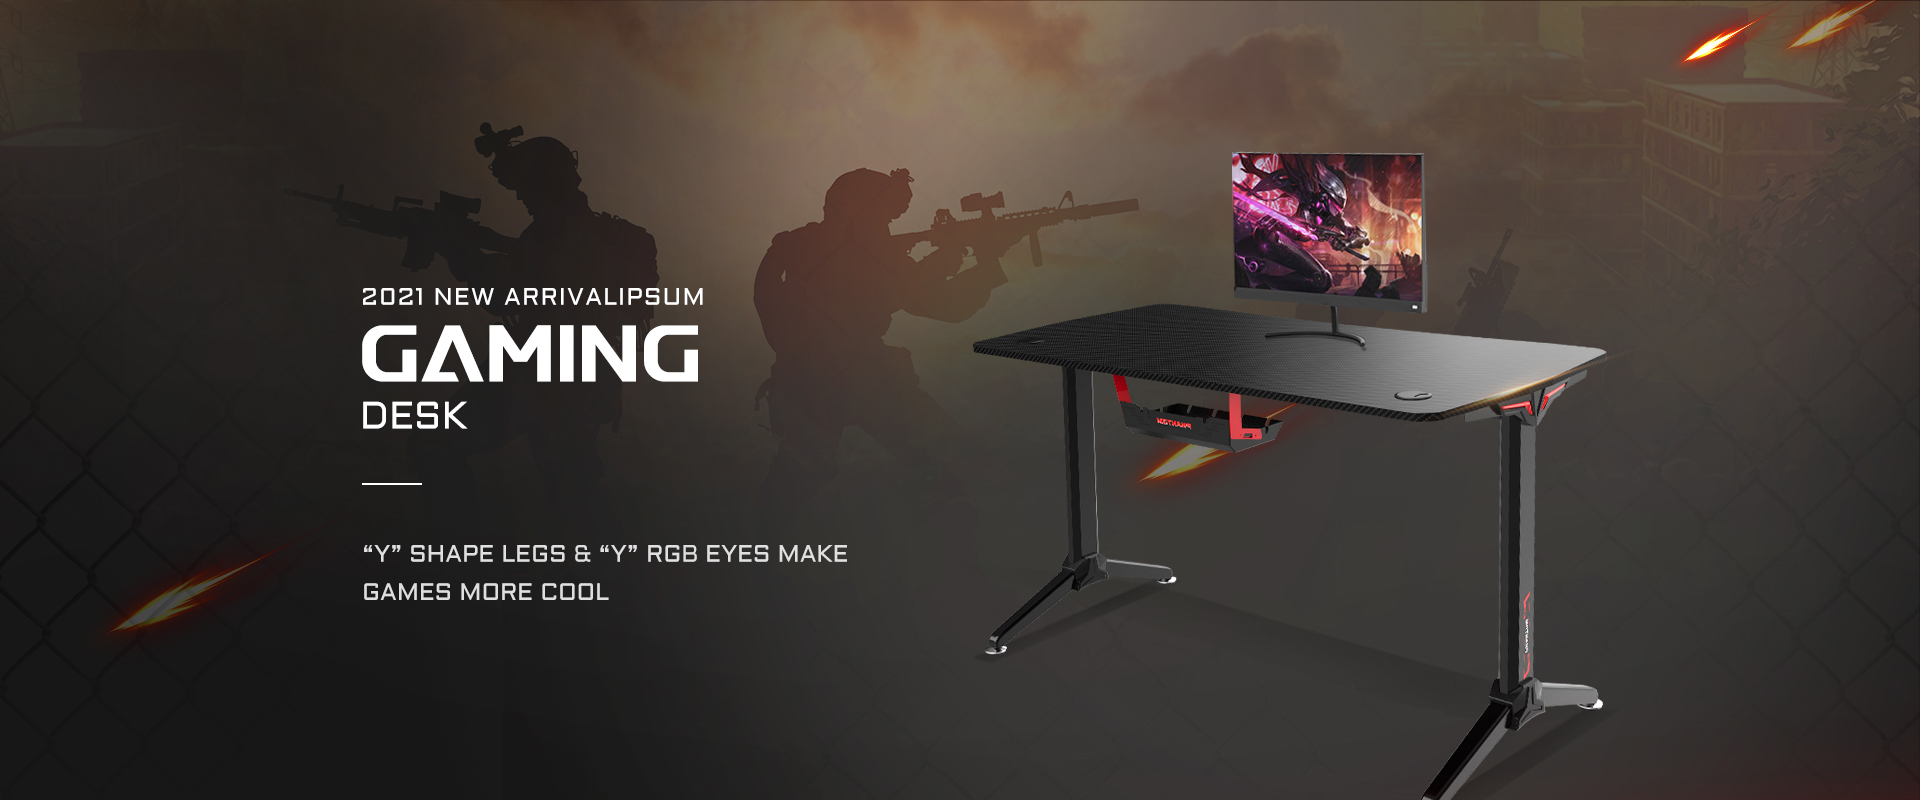 aStanding Desk, Lifting Desk, Adjustable Desk - Qianbei